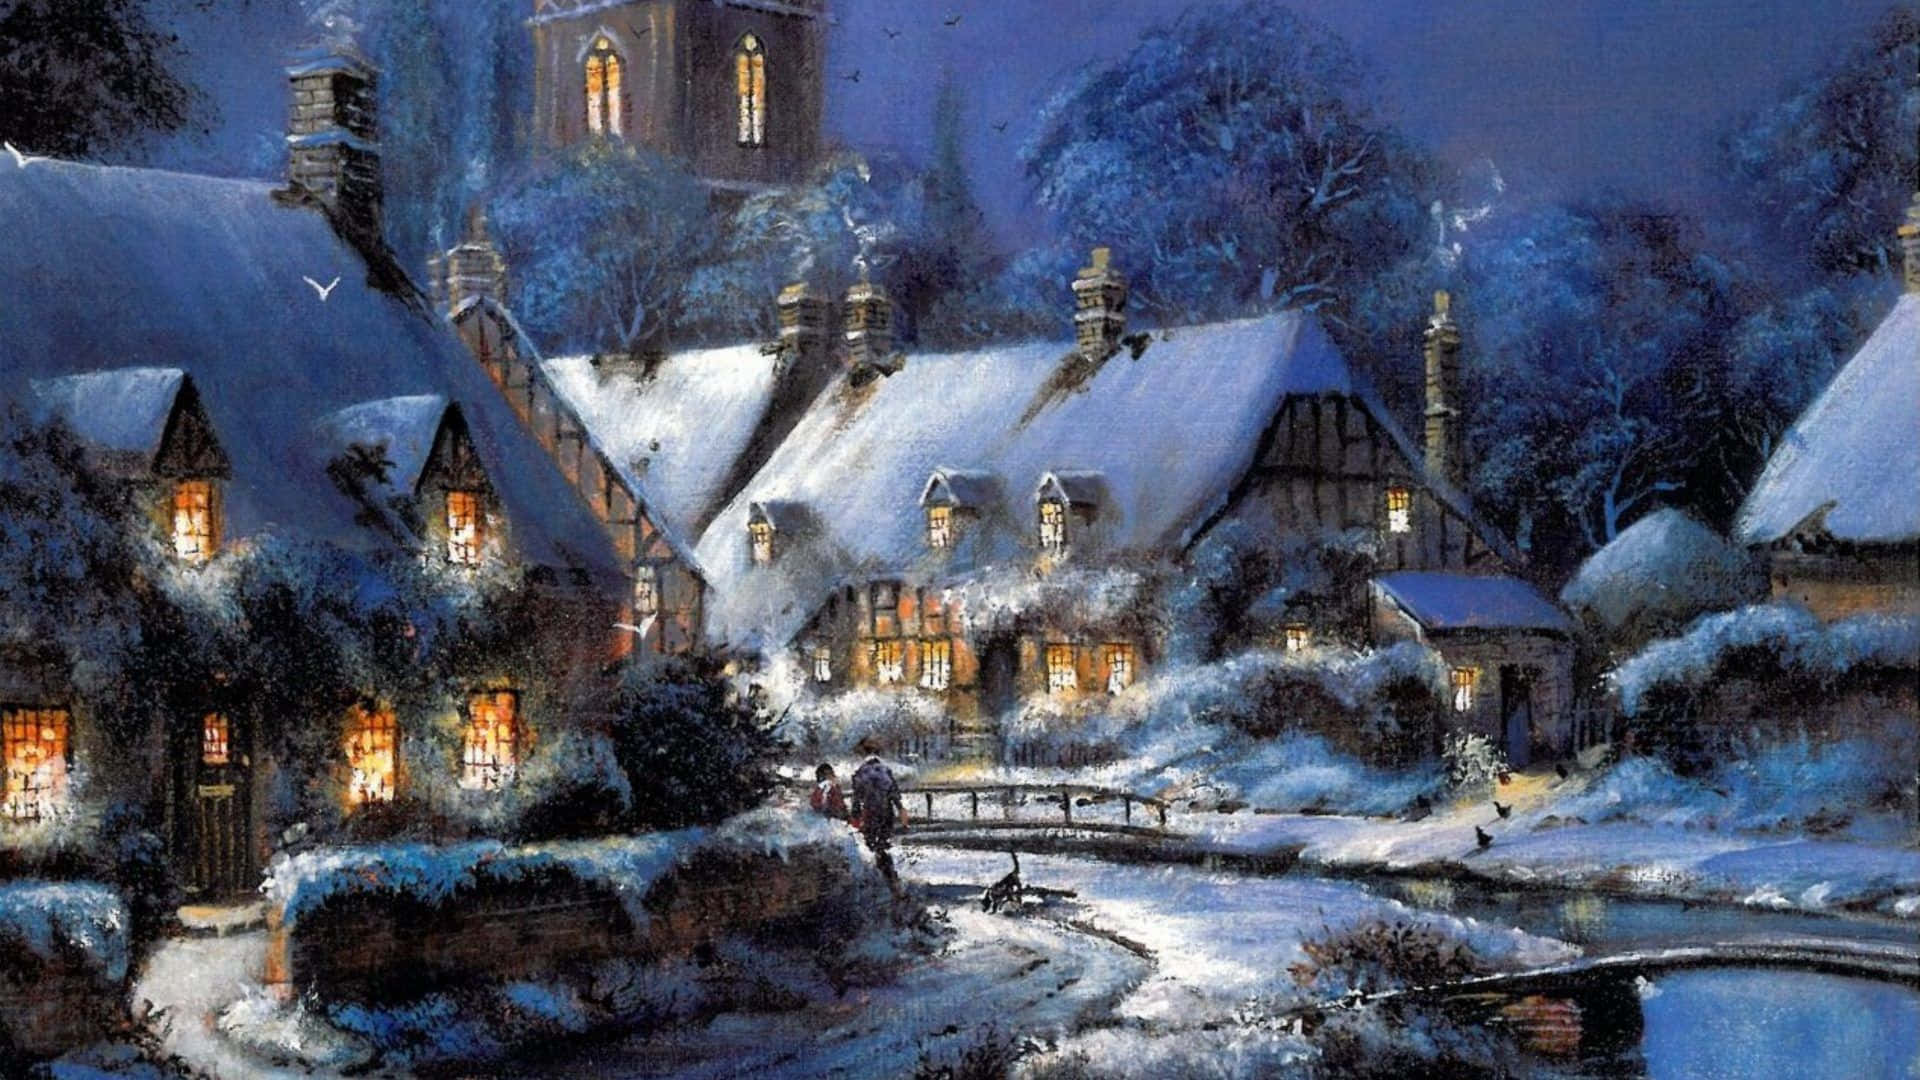 Enchanting Snowy Village at Twilight Wallpaper